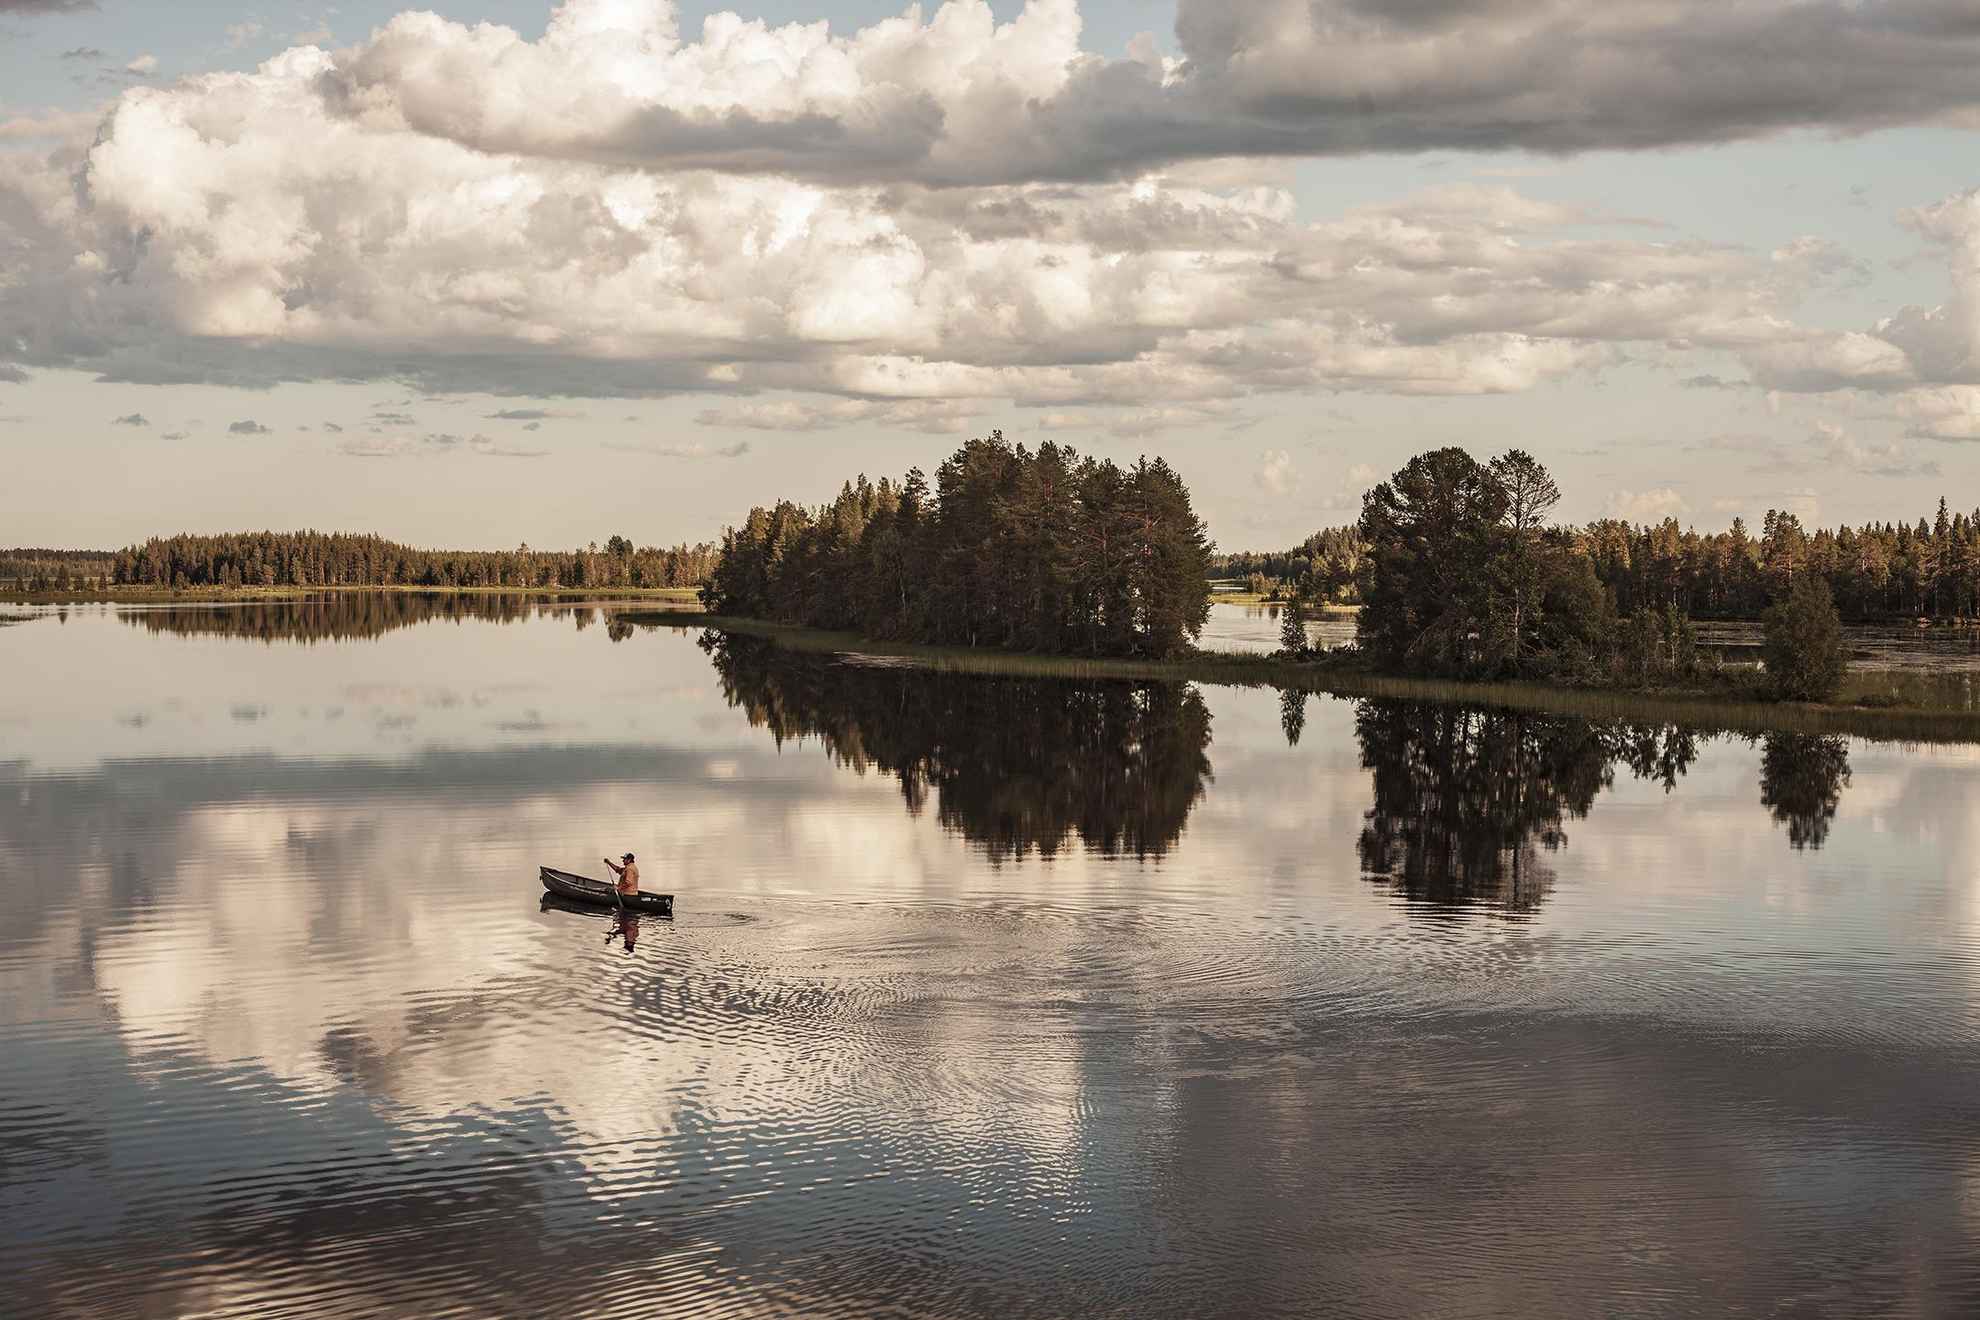 Canoeing on the river Juktån in Swedish Lapland.